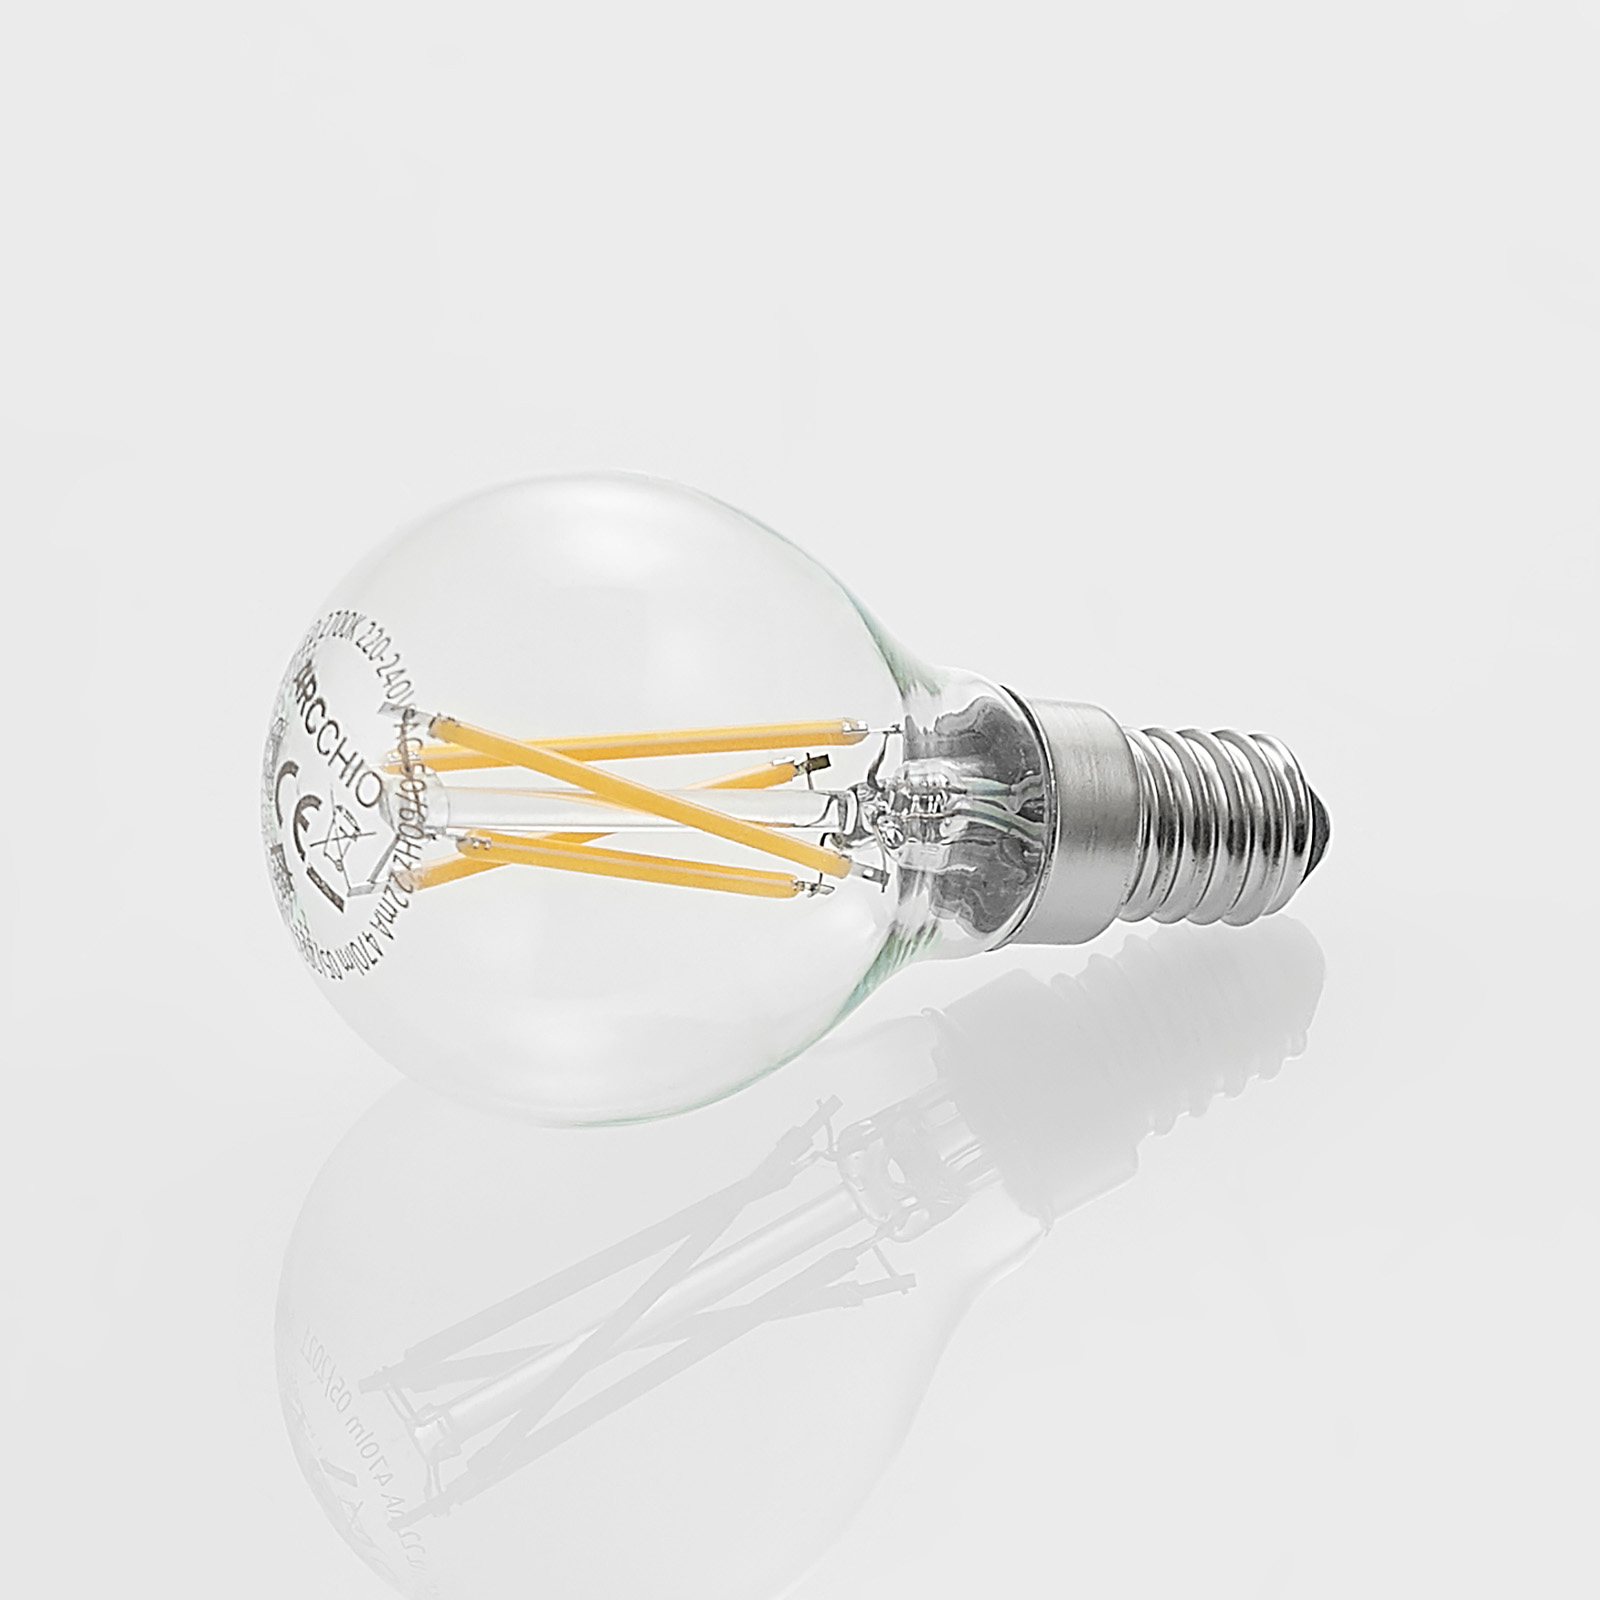 LED-lamppu E14 4W 2700K filamentti golfpallolamppu